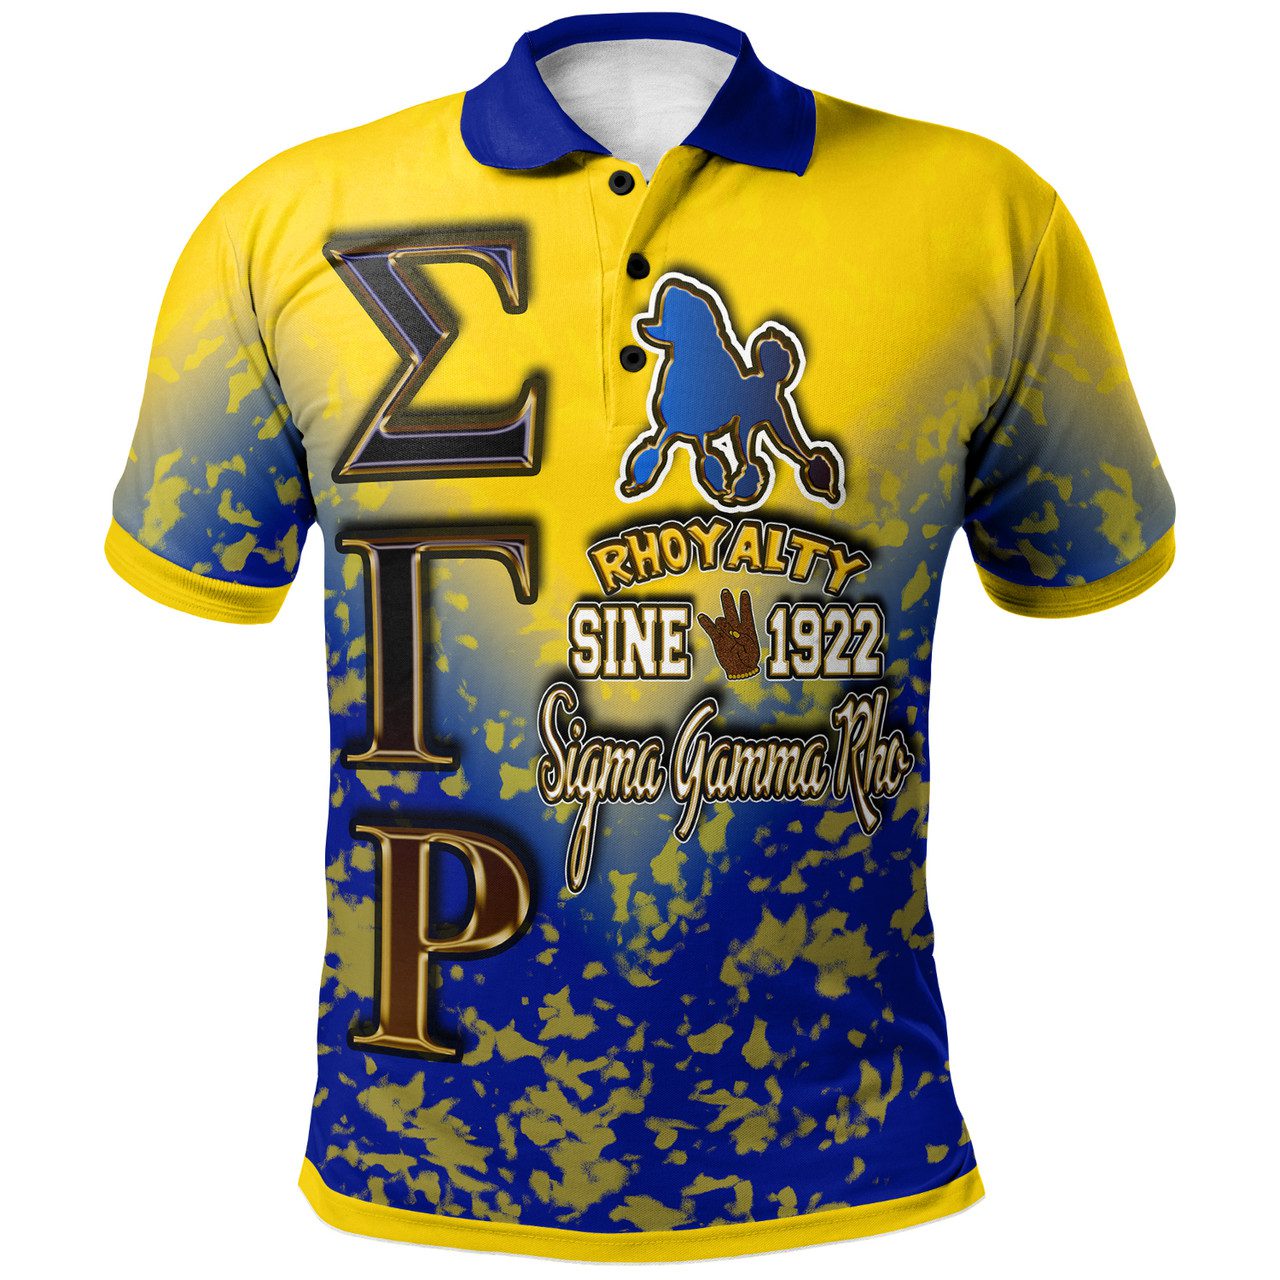 Sigma Gamma Rho Polo Shirt – Custom Sigma Gamma Rho Rhoyalty With Poodle And Hand Sine 1922 Polo Shirt